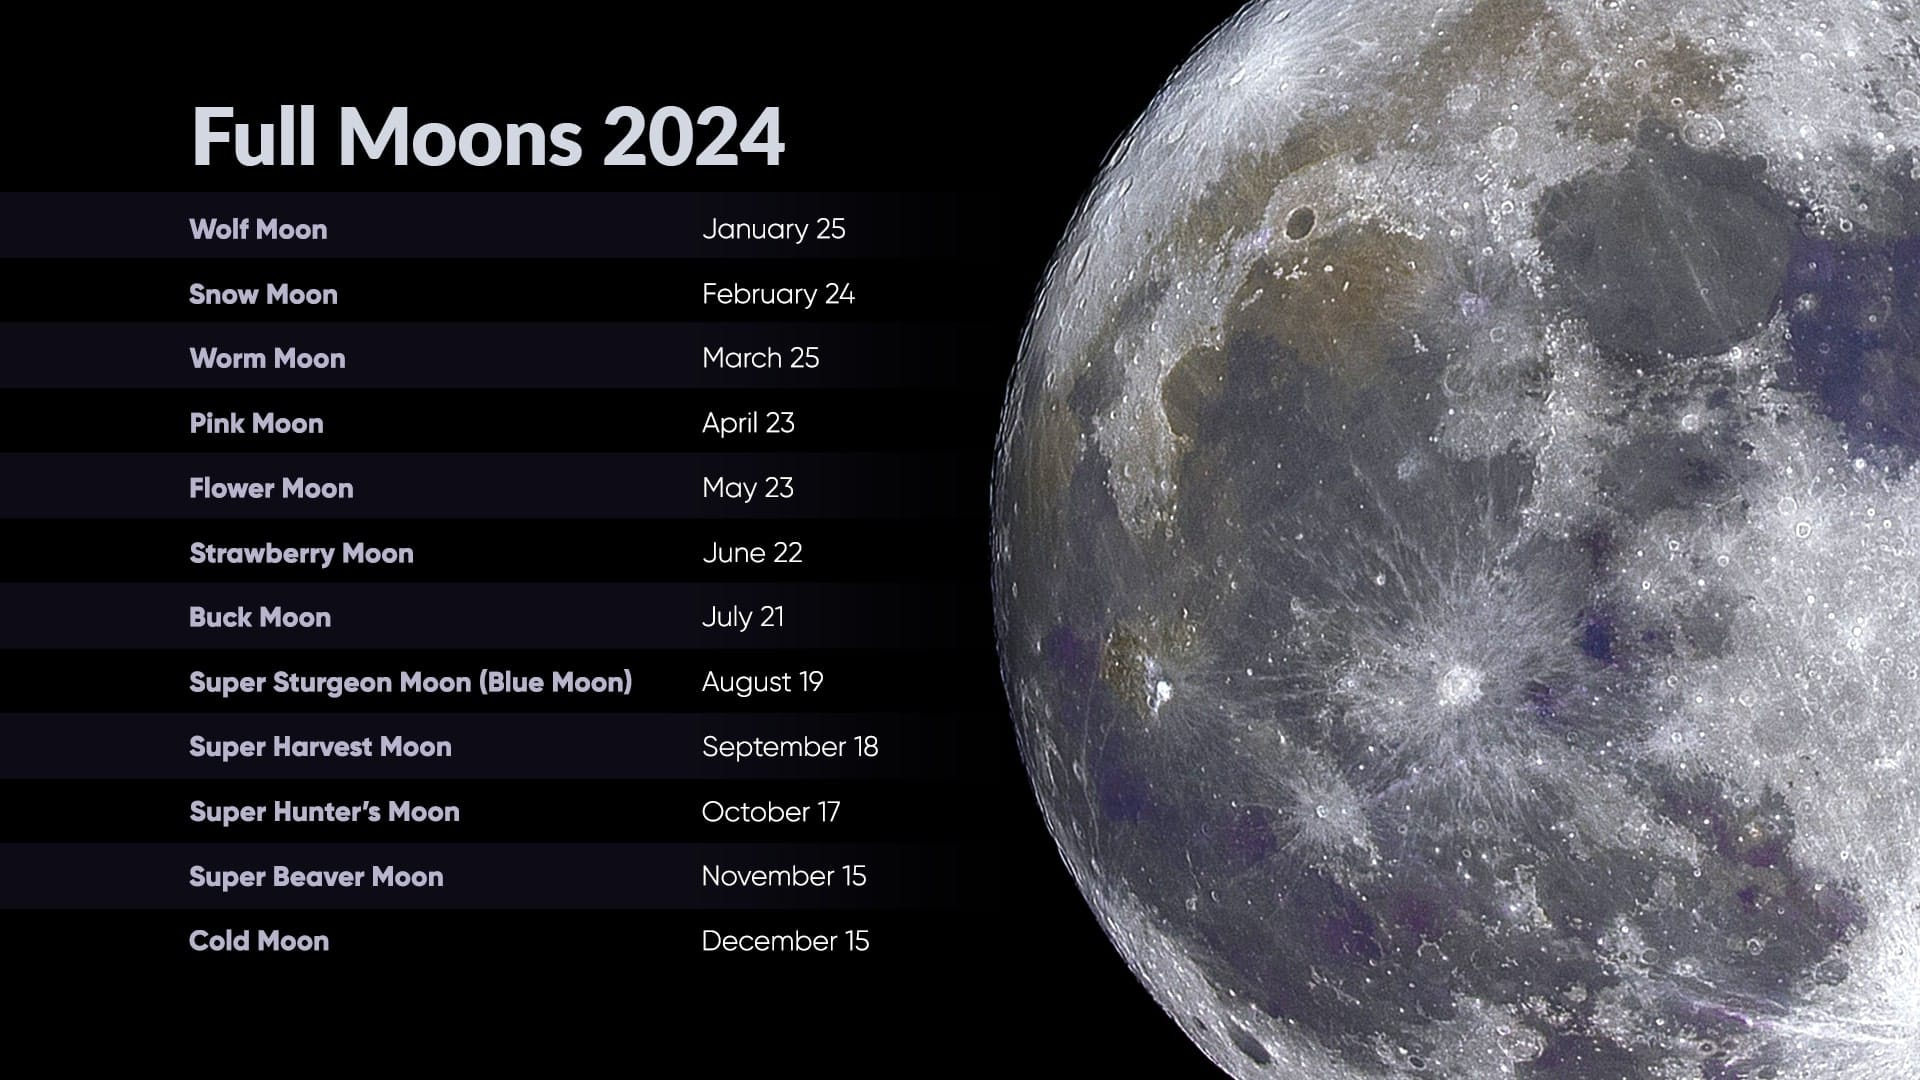 Next Full Moon | February Full Moon 2024 | Full Moon Schedule 2024 with July 25 Lunar Calendar 2024